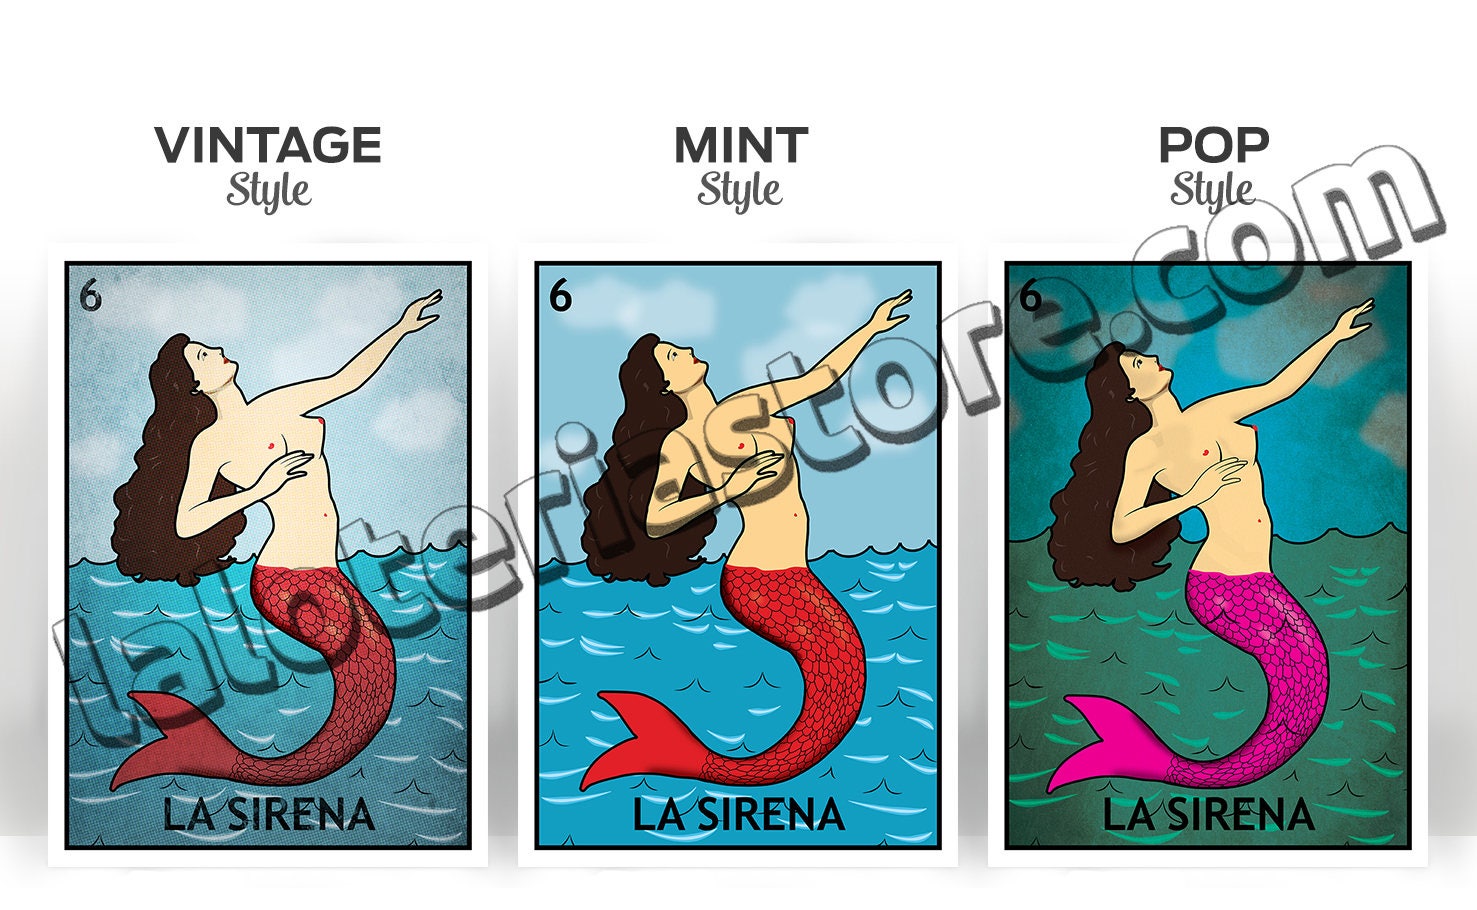  06 La Sirena Mermaid Loteria Card Mexican Bingo Lottery Day Of  Dead Dia Los Muertos Decorations Mexico Ocean Sea Fish Party Spanish Native  Sign Cool Wall Decor Art Print Poster 24x36 